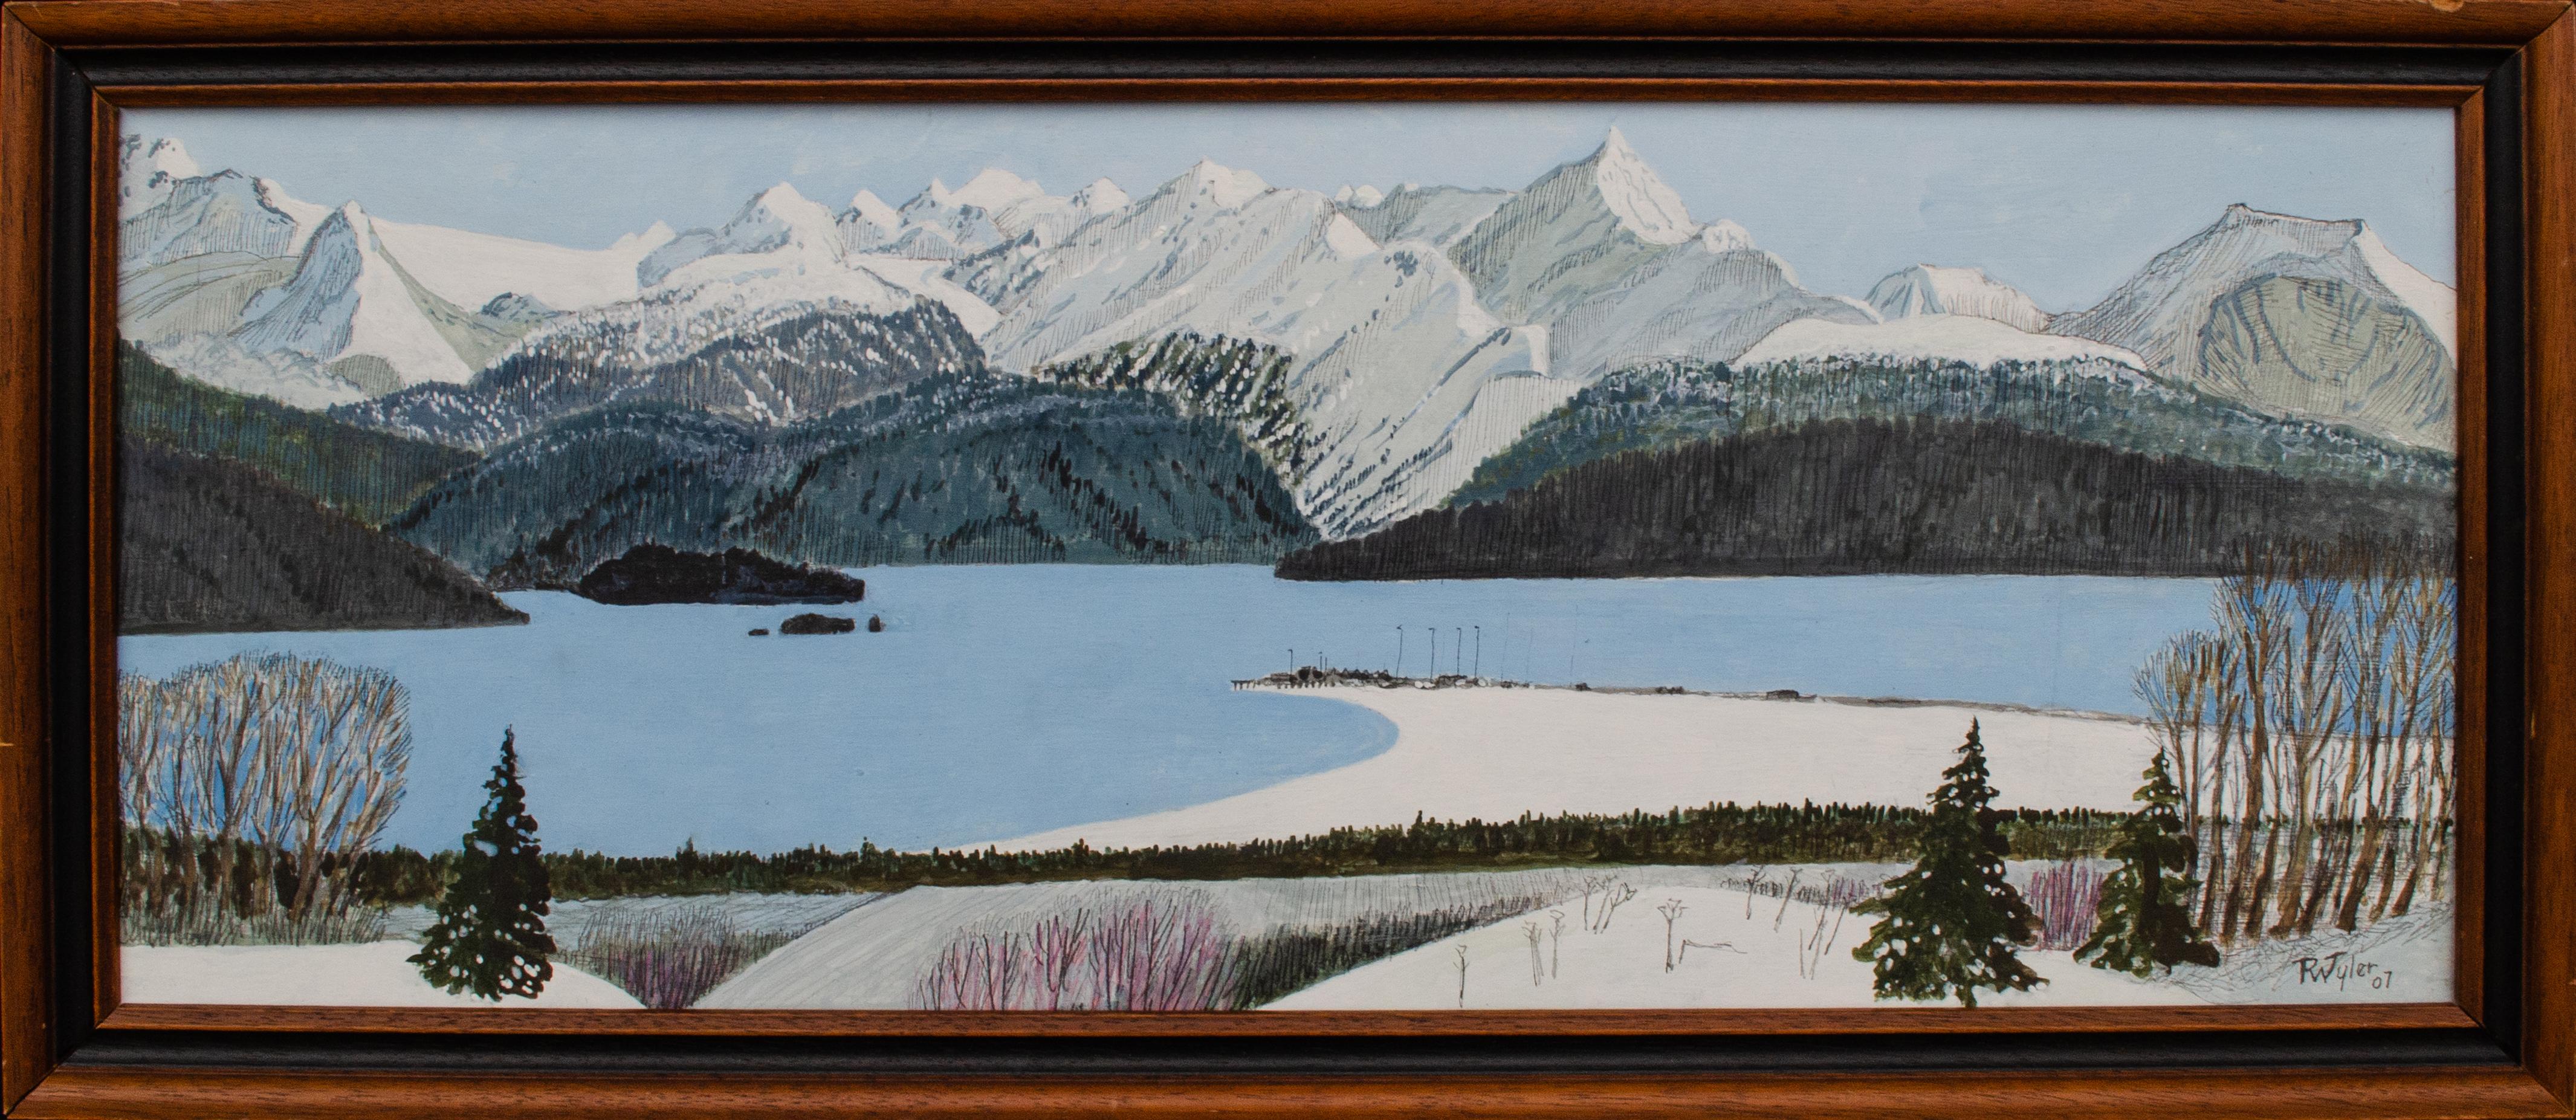 Landscape Painting Richard Wilson Tyler - Paysage de la baie de Kachemak, Alaska par R.W. "Toby" Tyler